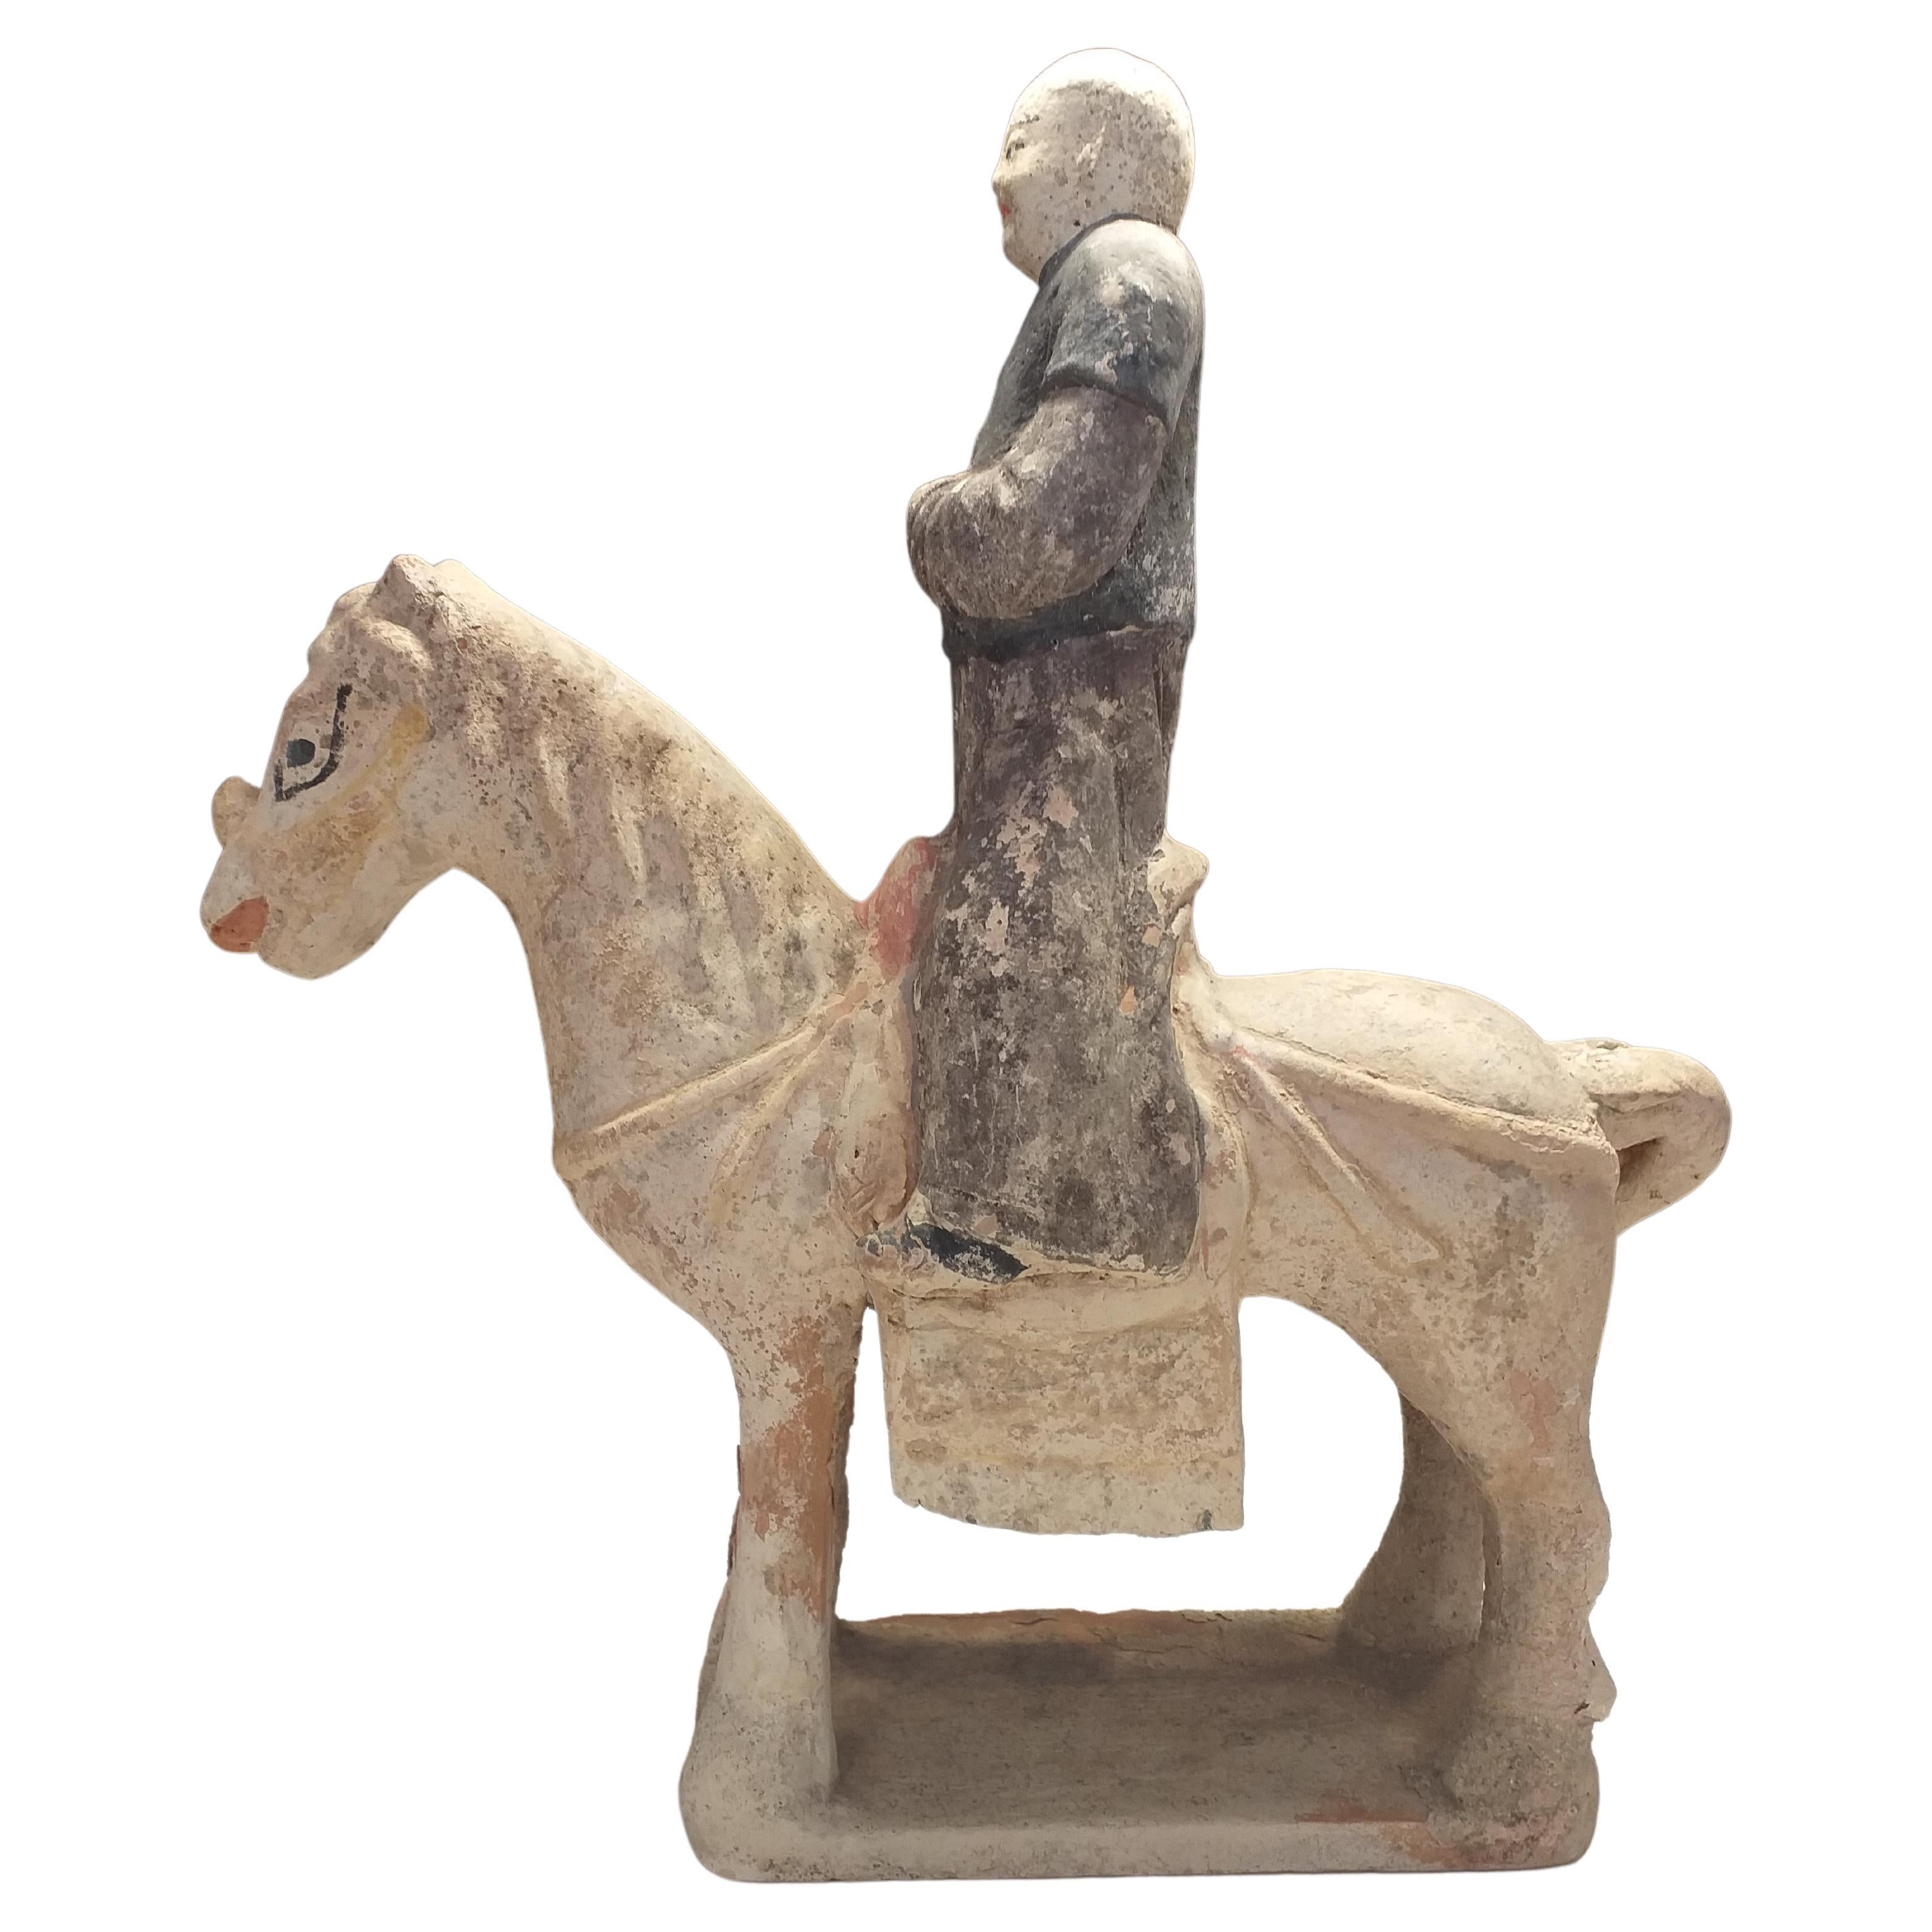 Rider 2, Polychrome Terracotta, Ming Period